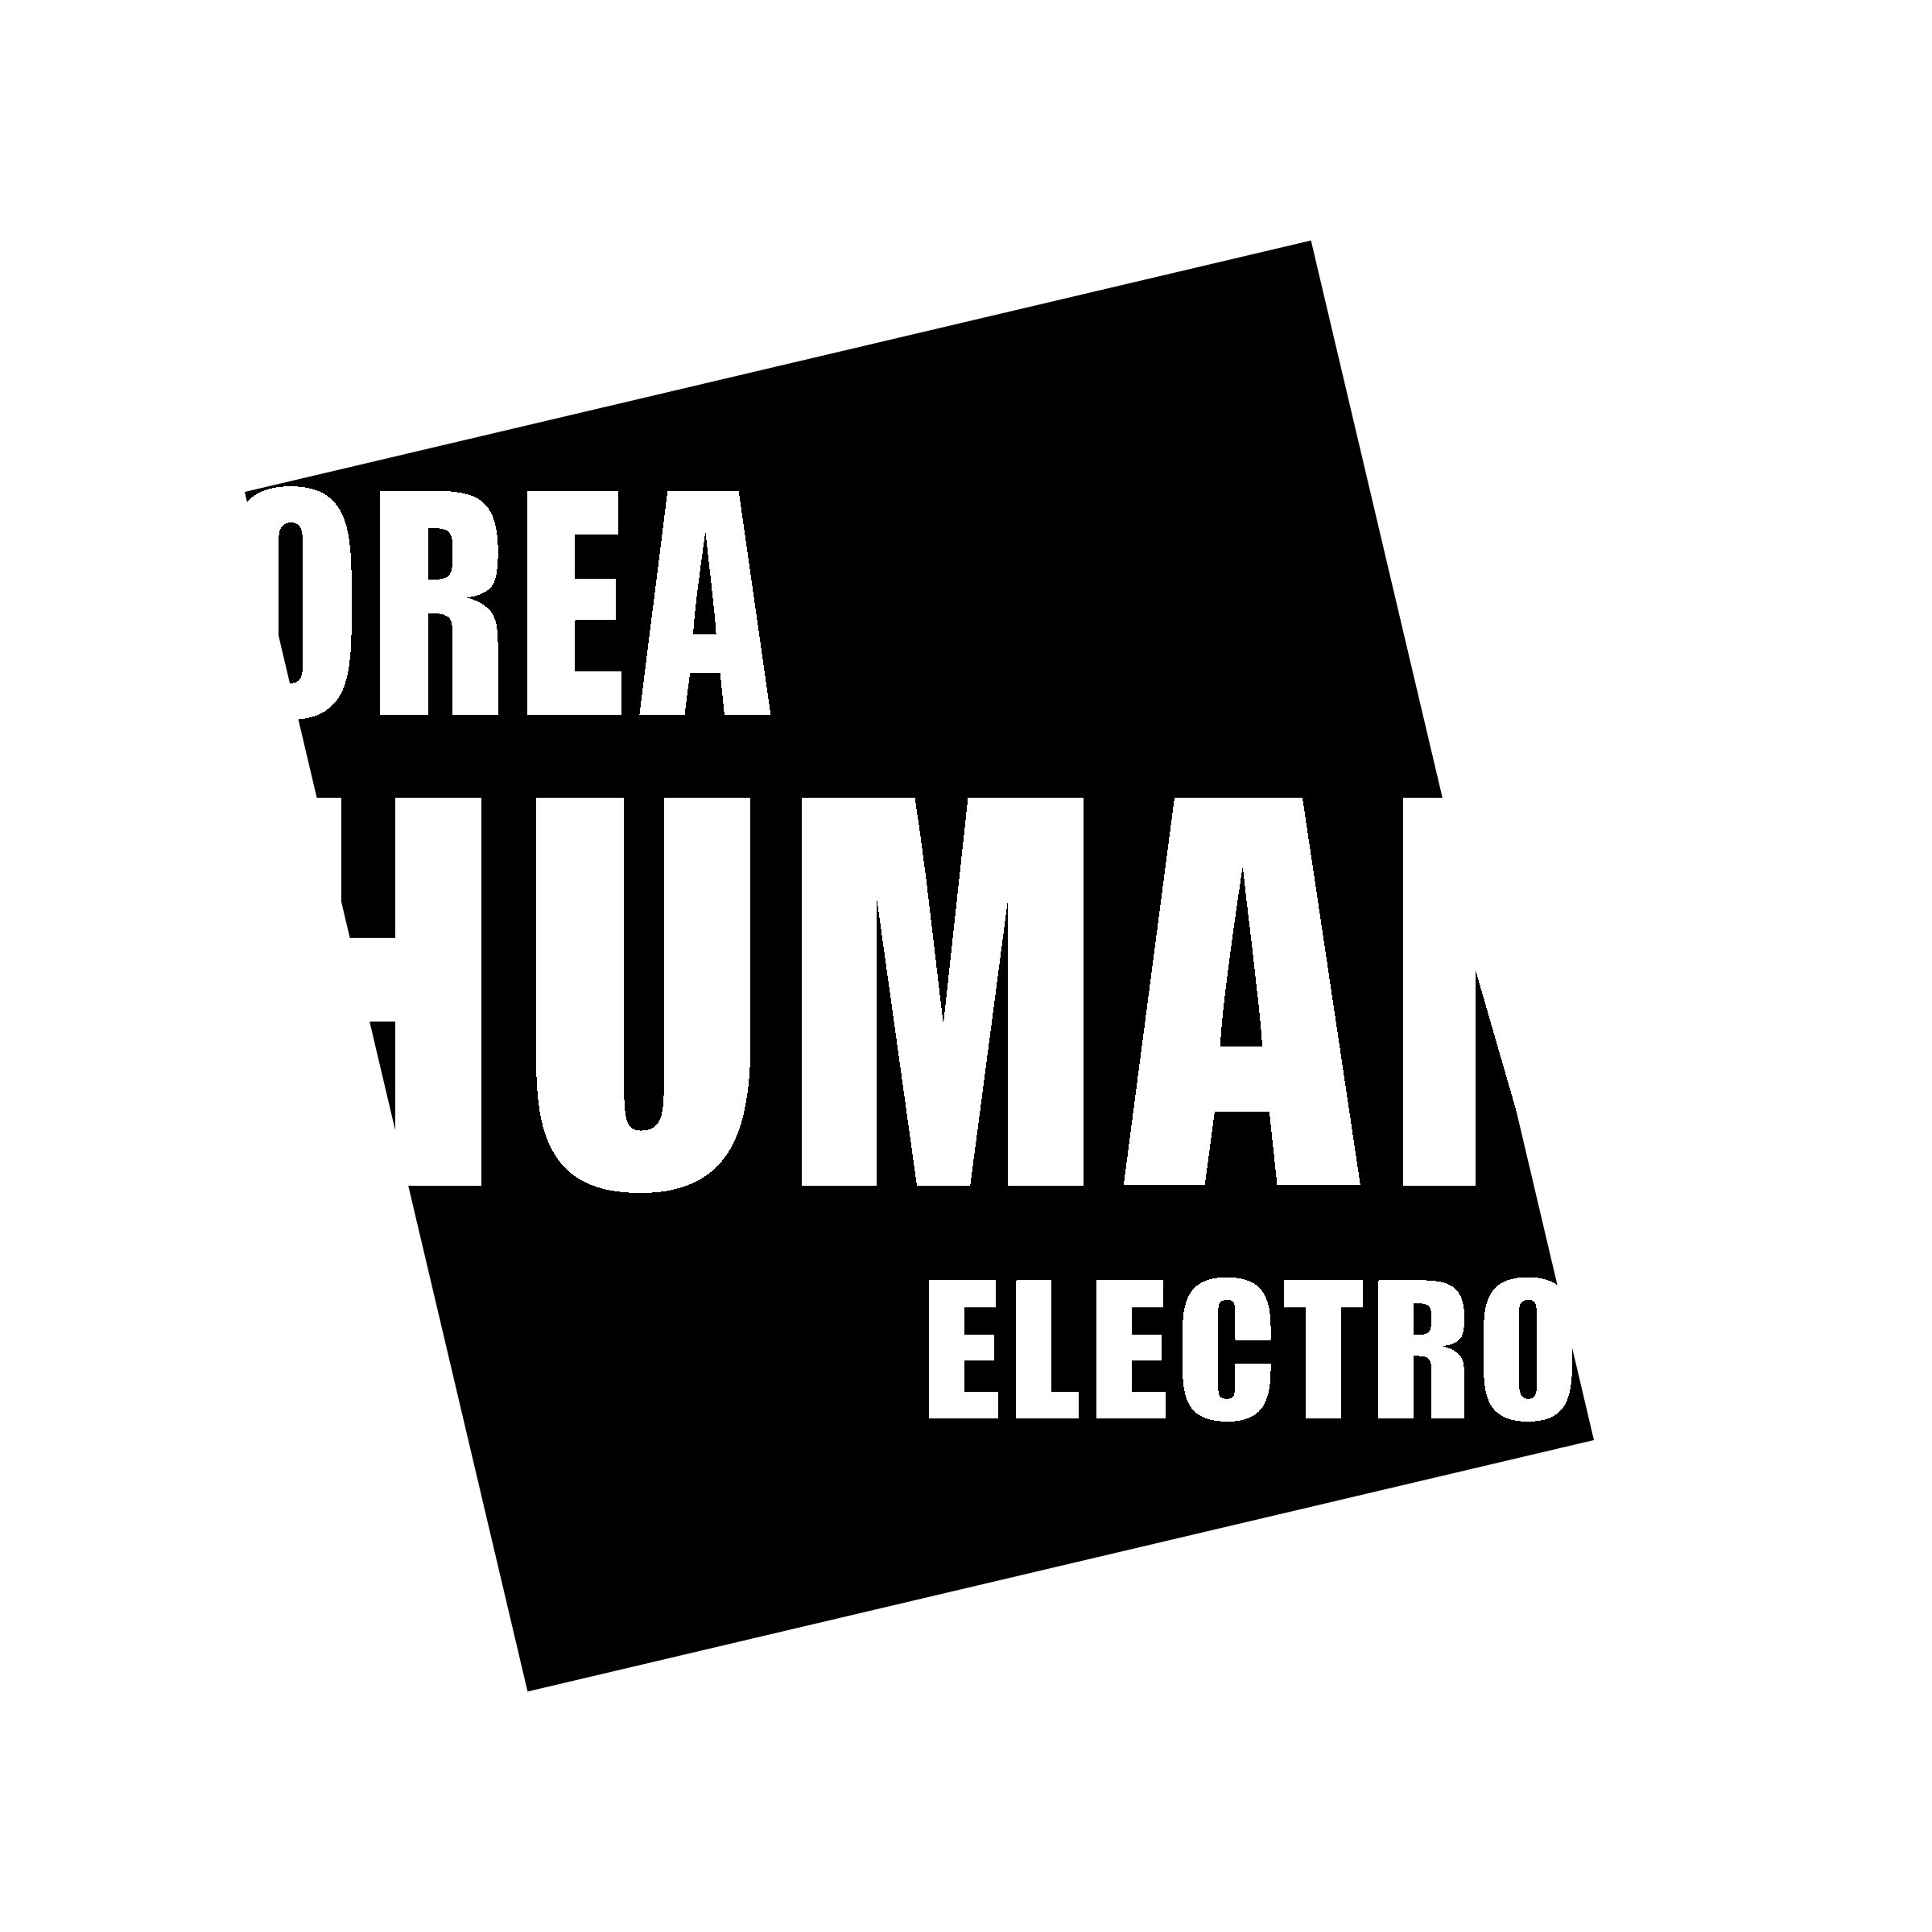 Orea Logo - Korea Human Electronic Logo PNG Transparent & SVG Vector - Freebie ...